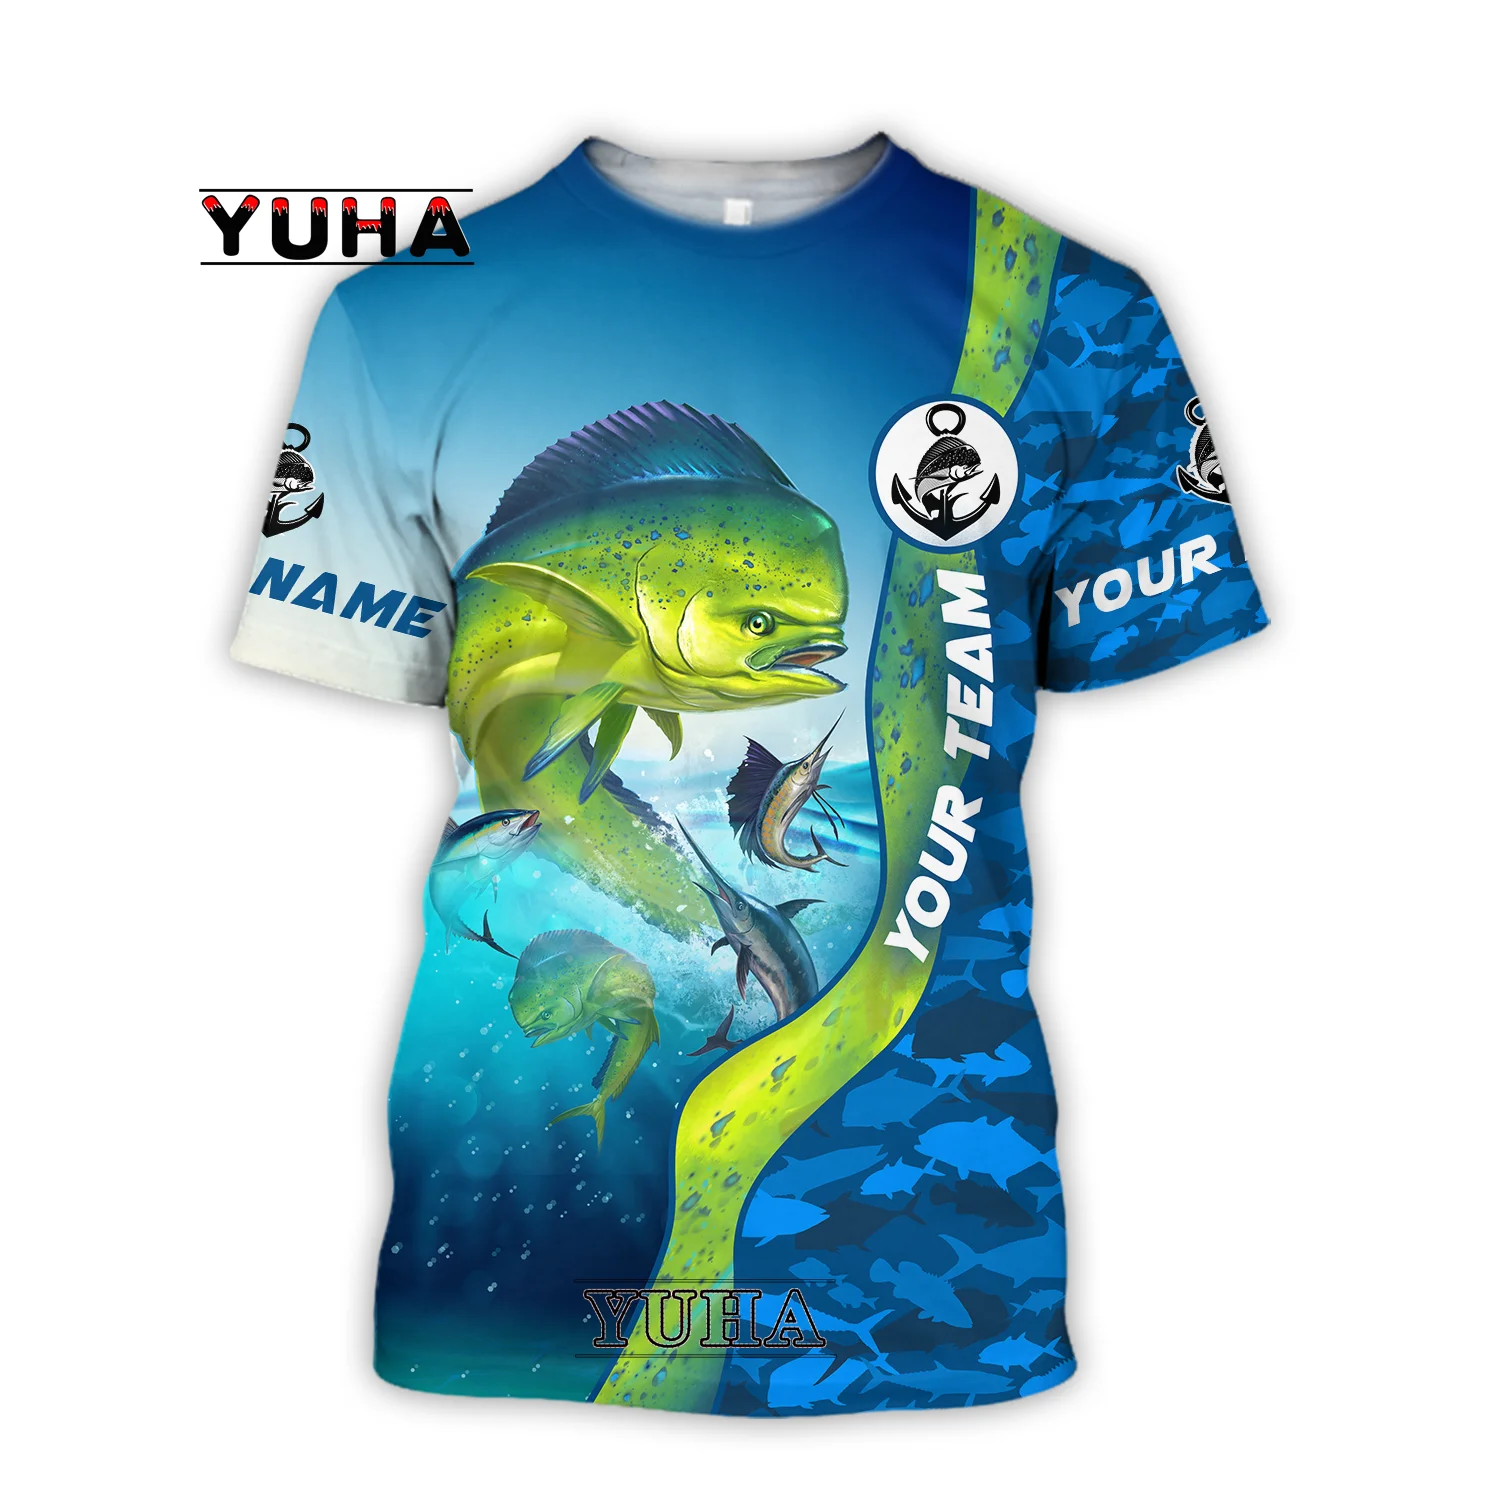 Tuna Fishing Camo 3D Printing Men's T-shirt Hot Summer Fashion